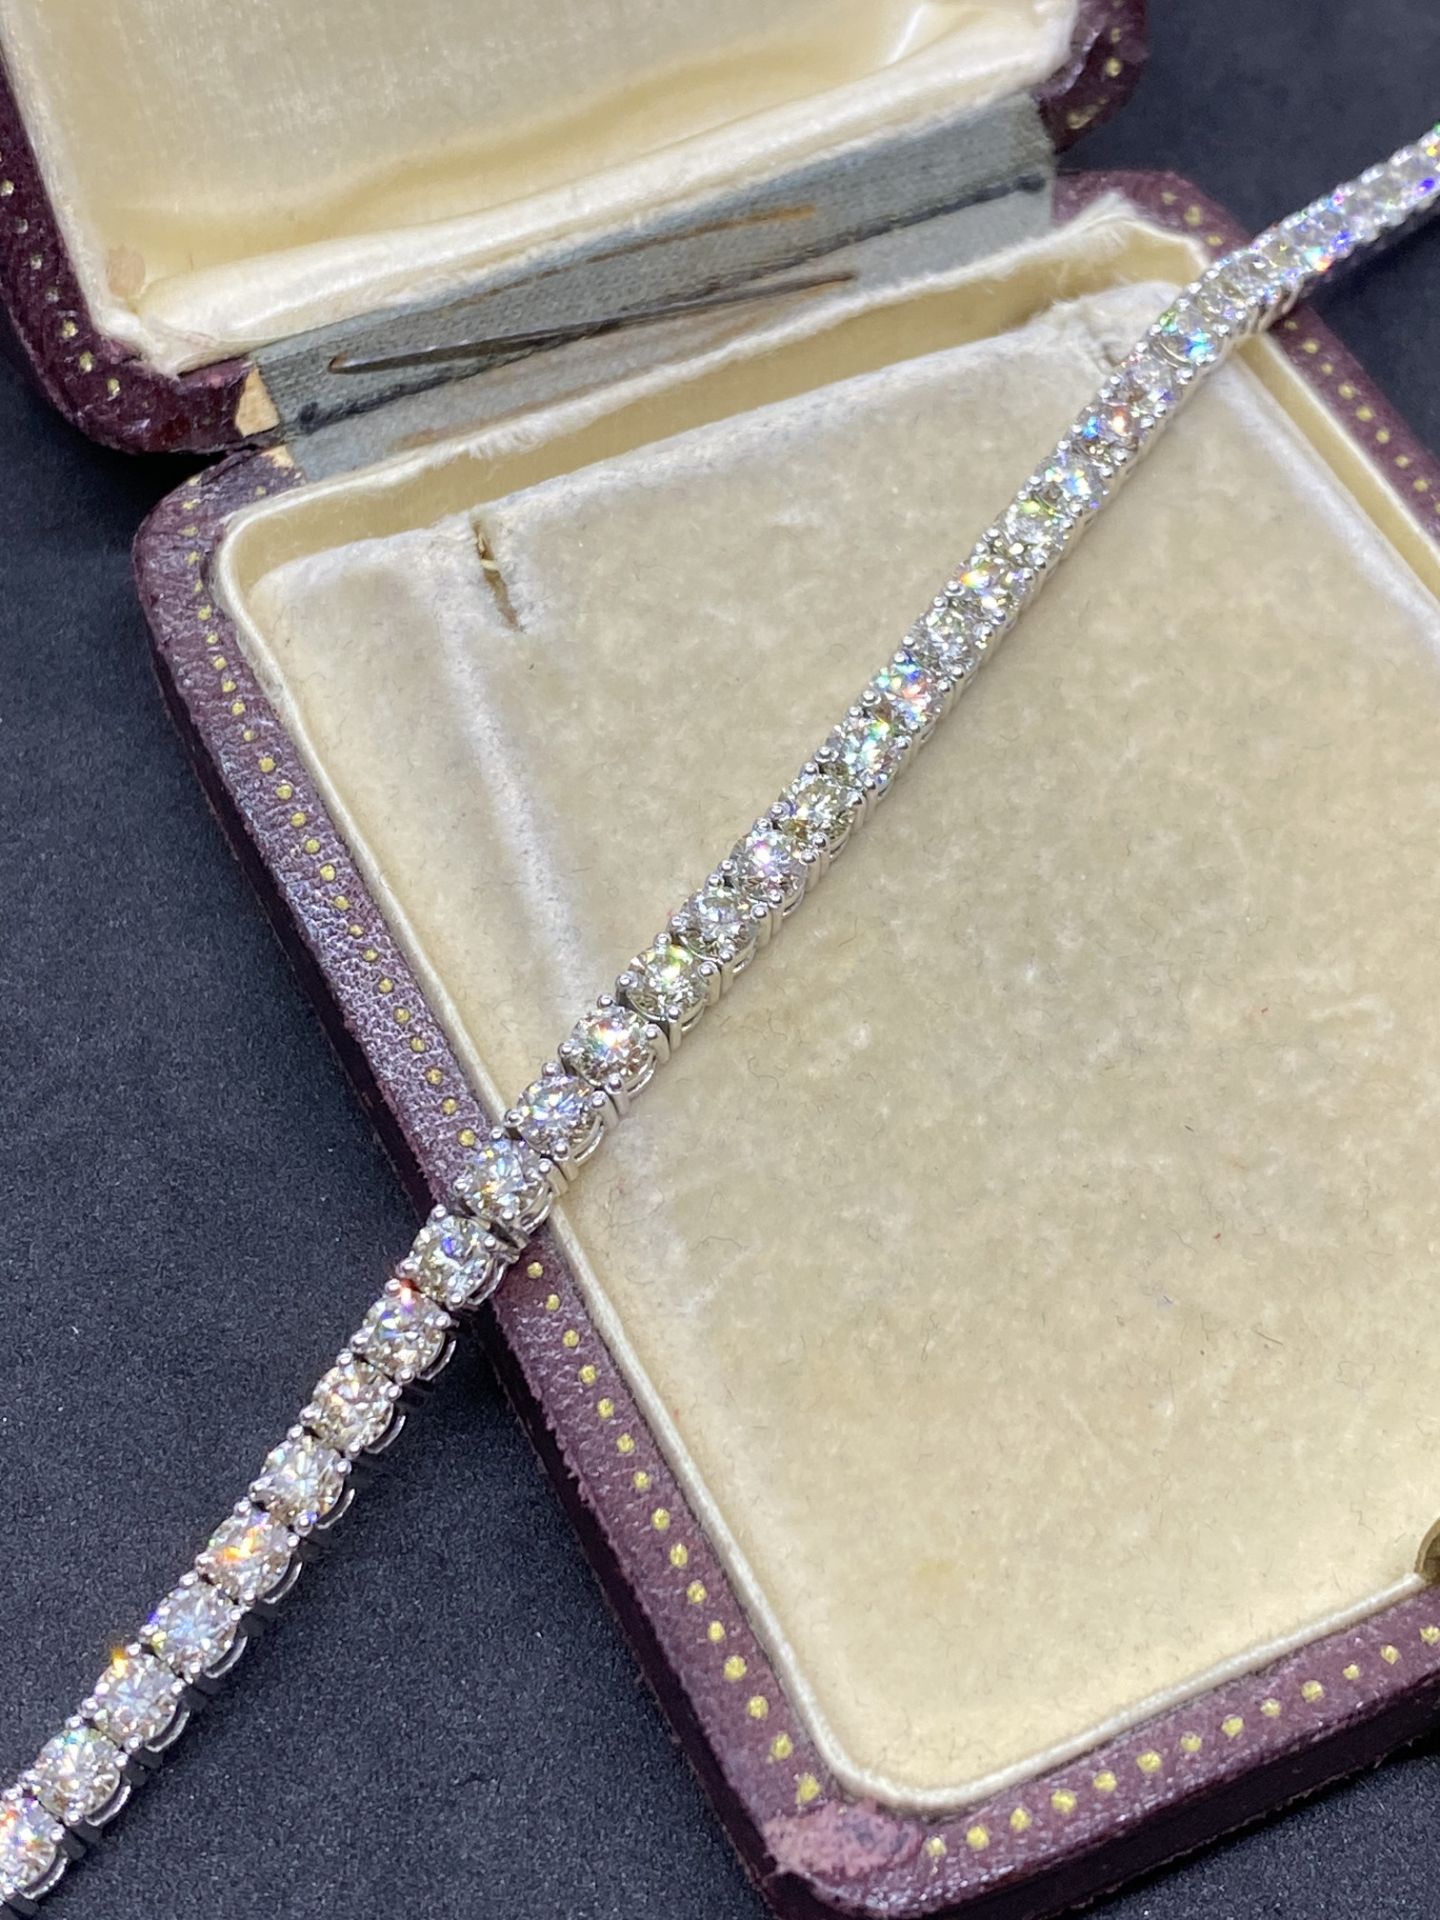 10.49ct DIAMOND TENNIS BRACELET SET IN 14ct WHITE GOLD - Image 2 of 6